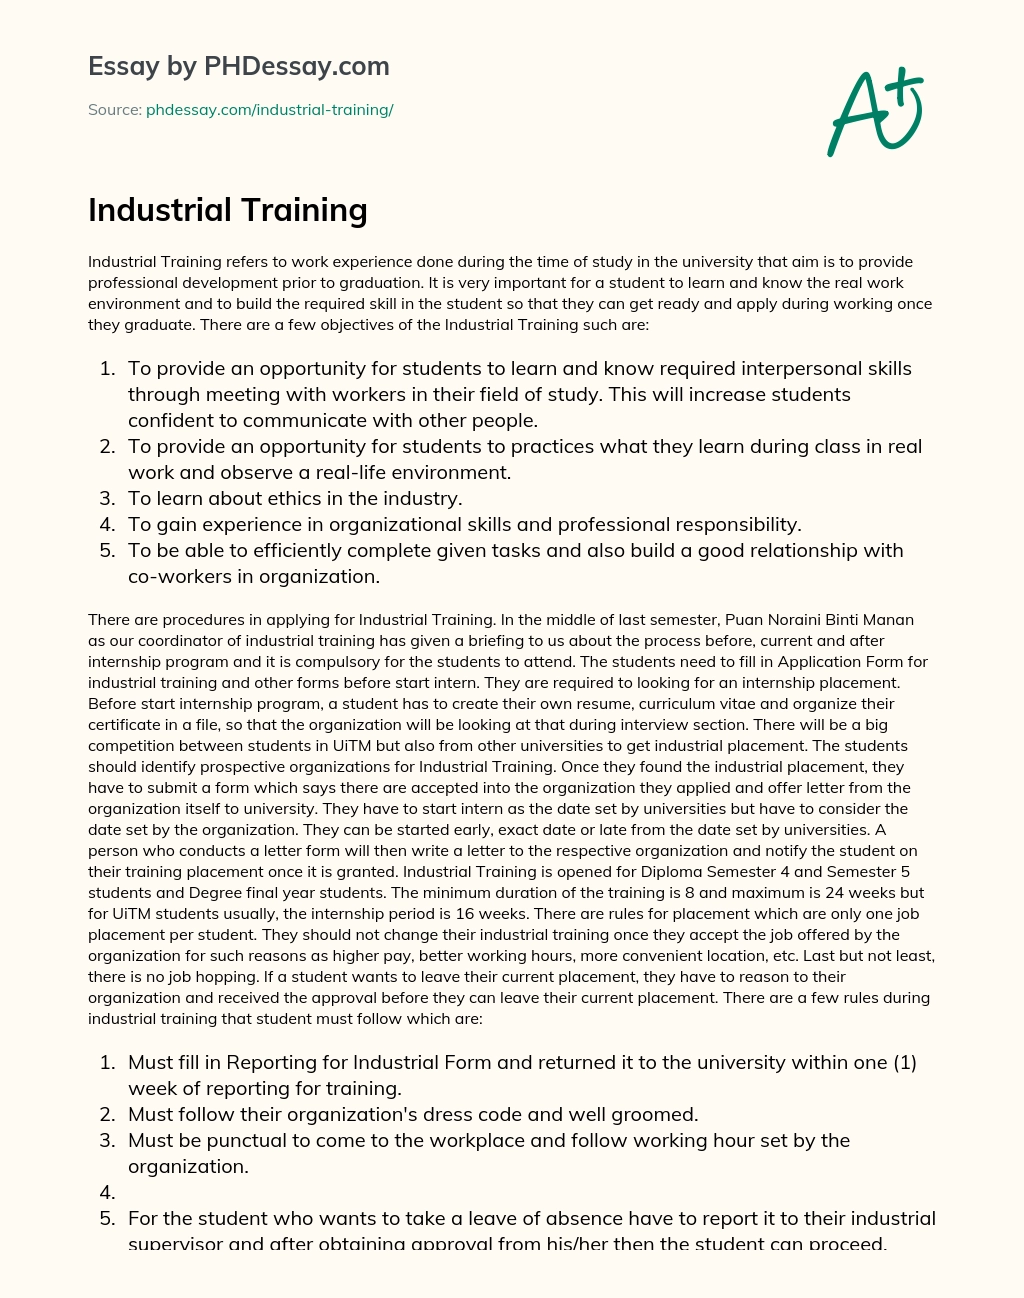 Industrial Training essay